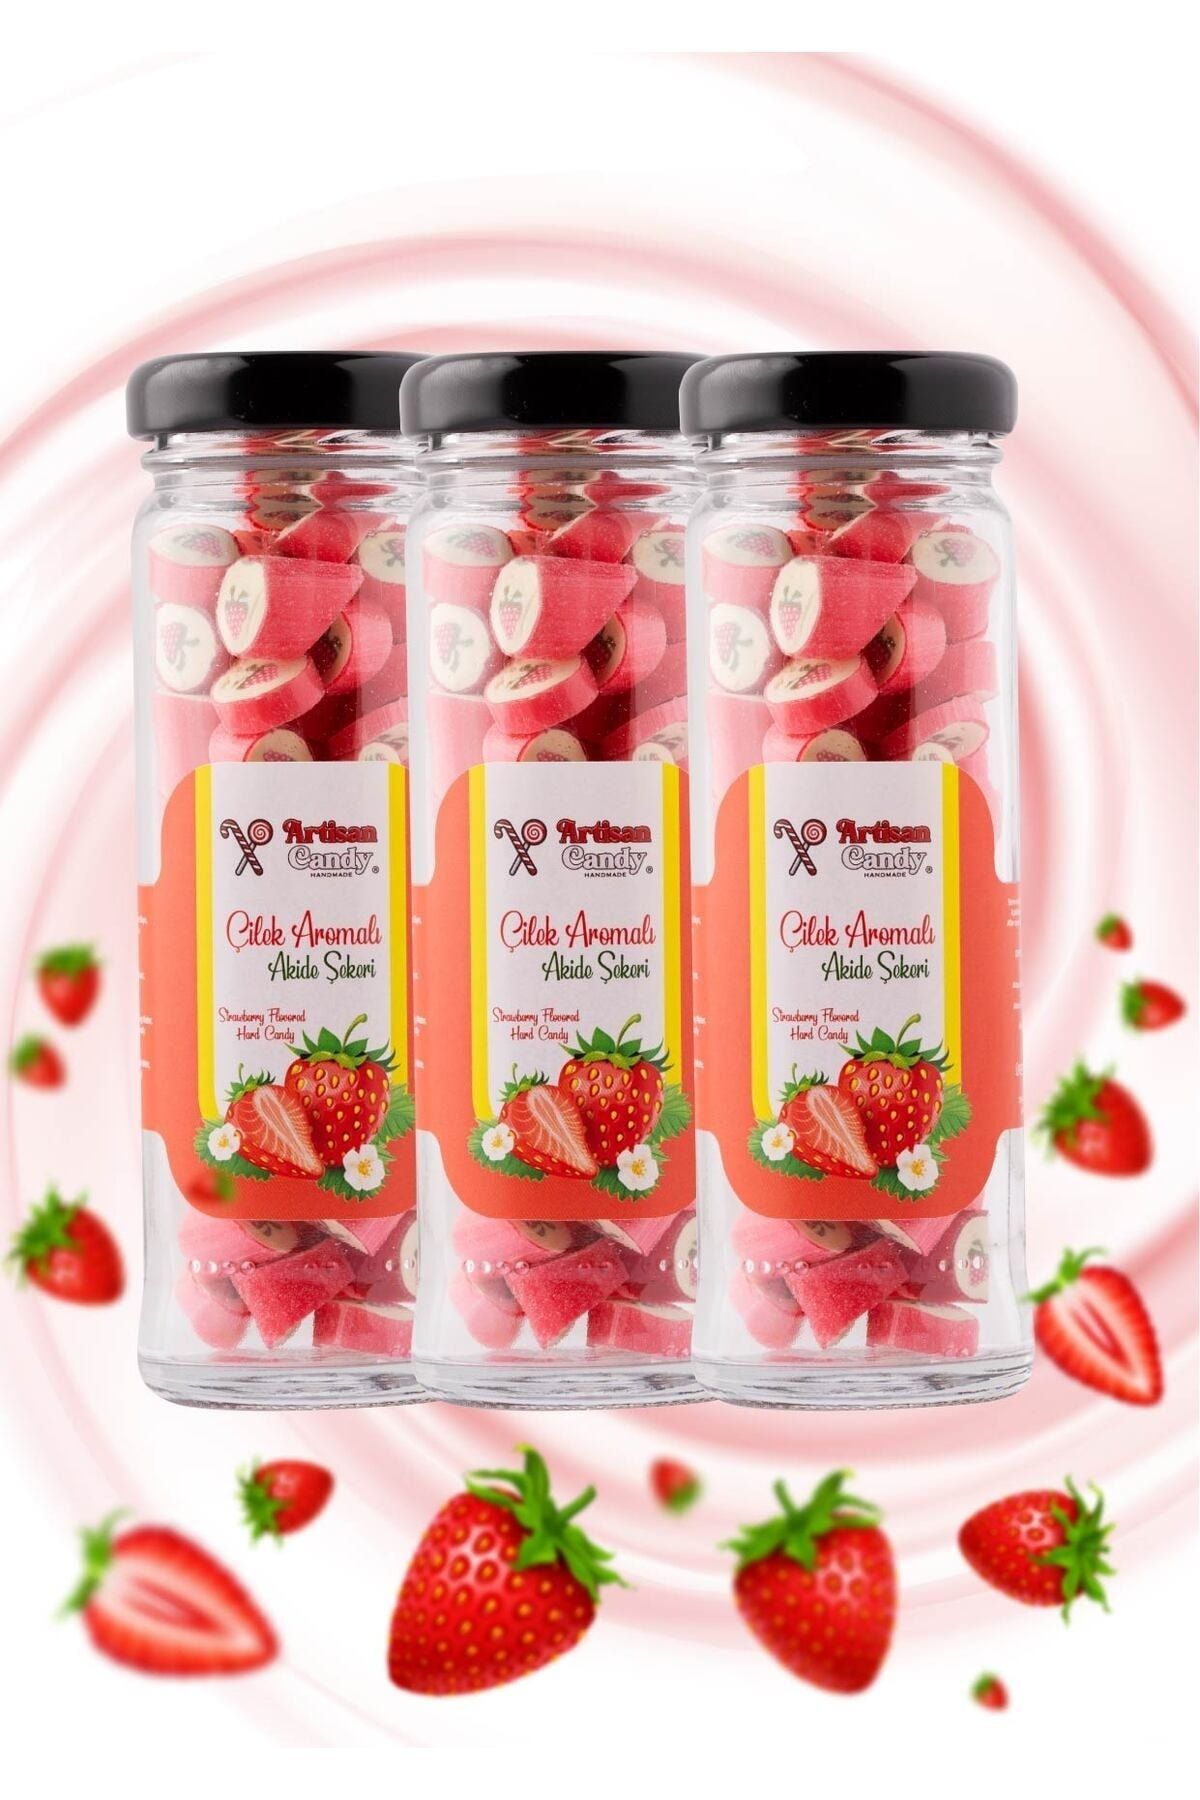 Artisan Candy Artisan Strawberry Candy / Çilek Aromalı El Yapımı Şeker ...